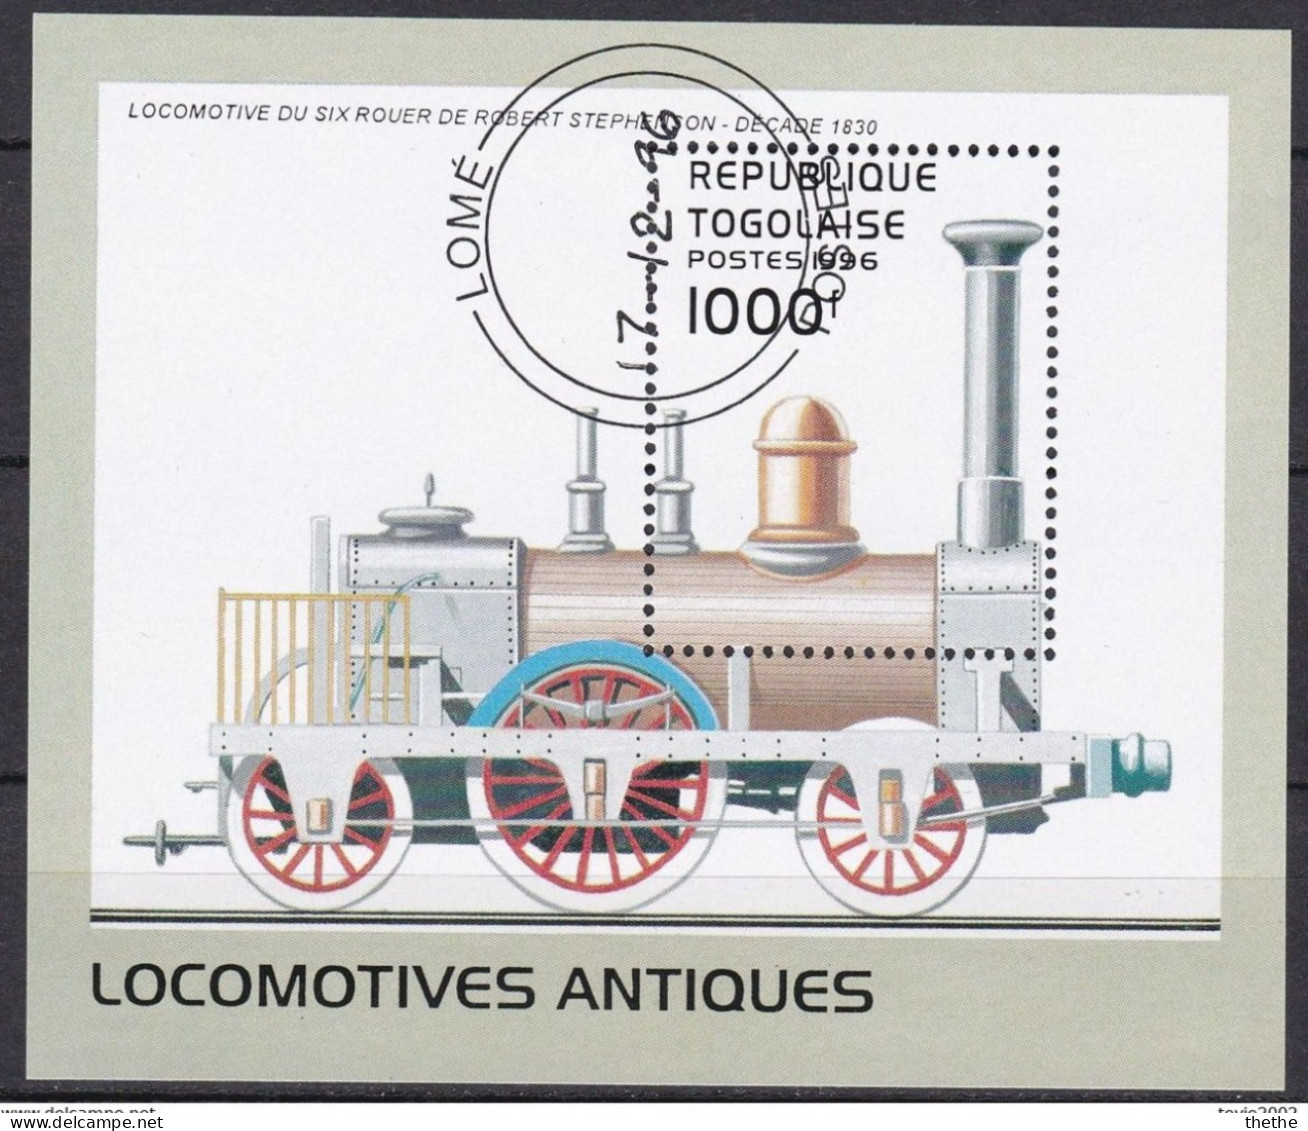 TOGO - Locomotive à Six Roues, Robert Stephenson, 1830 - Eisenbahnen